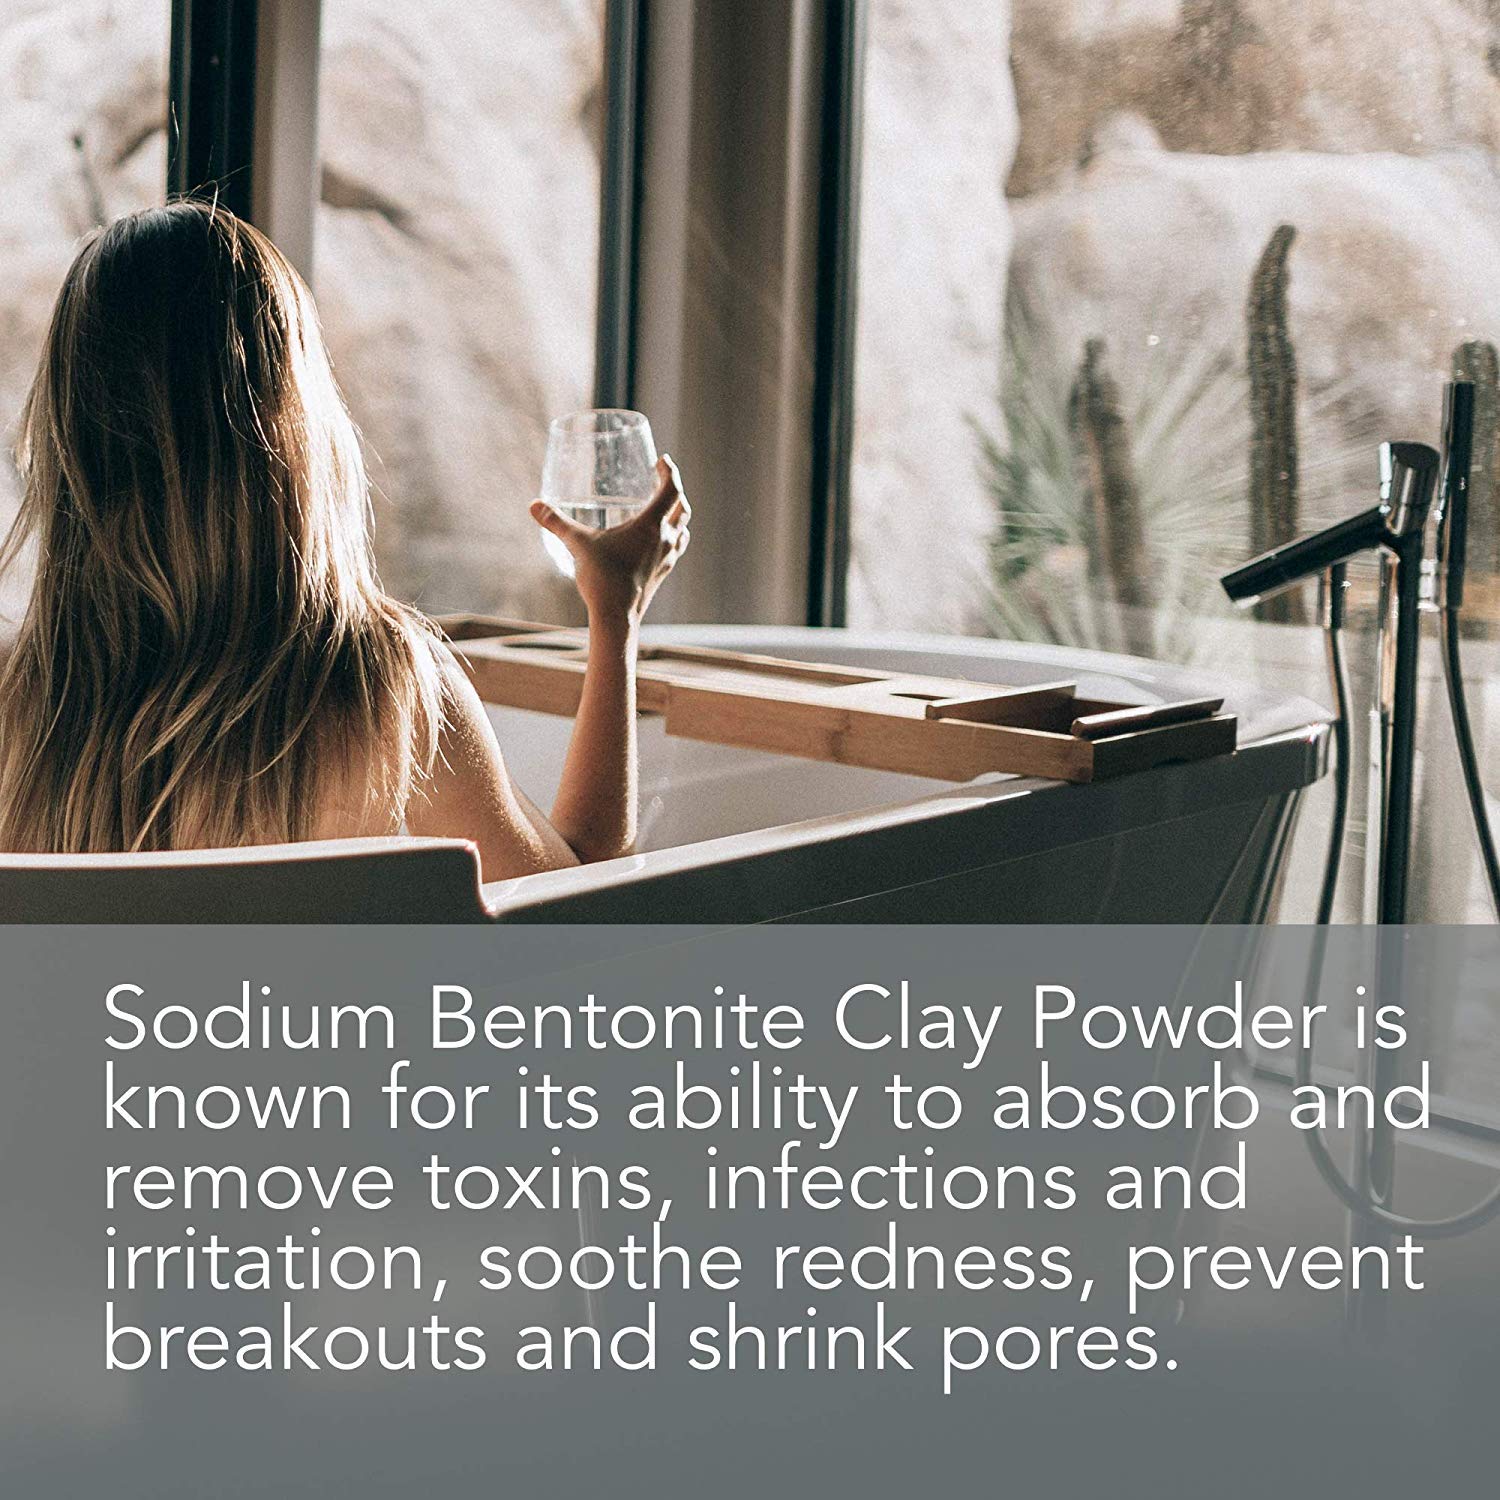 Radiant Complex Sodium Bentonite Clay Powder - Indian Healing Clay - 100% Pure Sodium Bentonite - DYI Clay Face Mask - 5 lbs